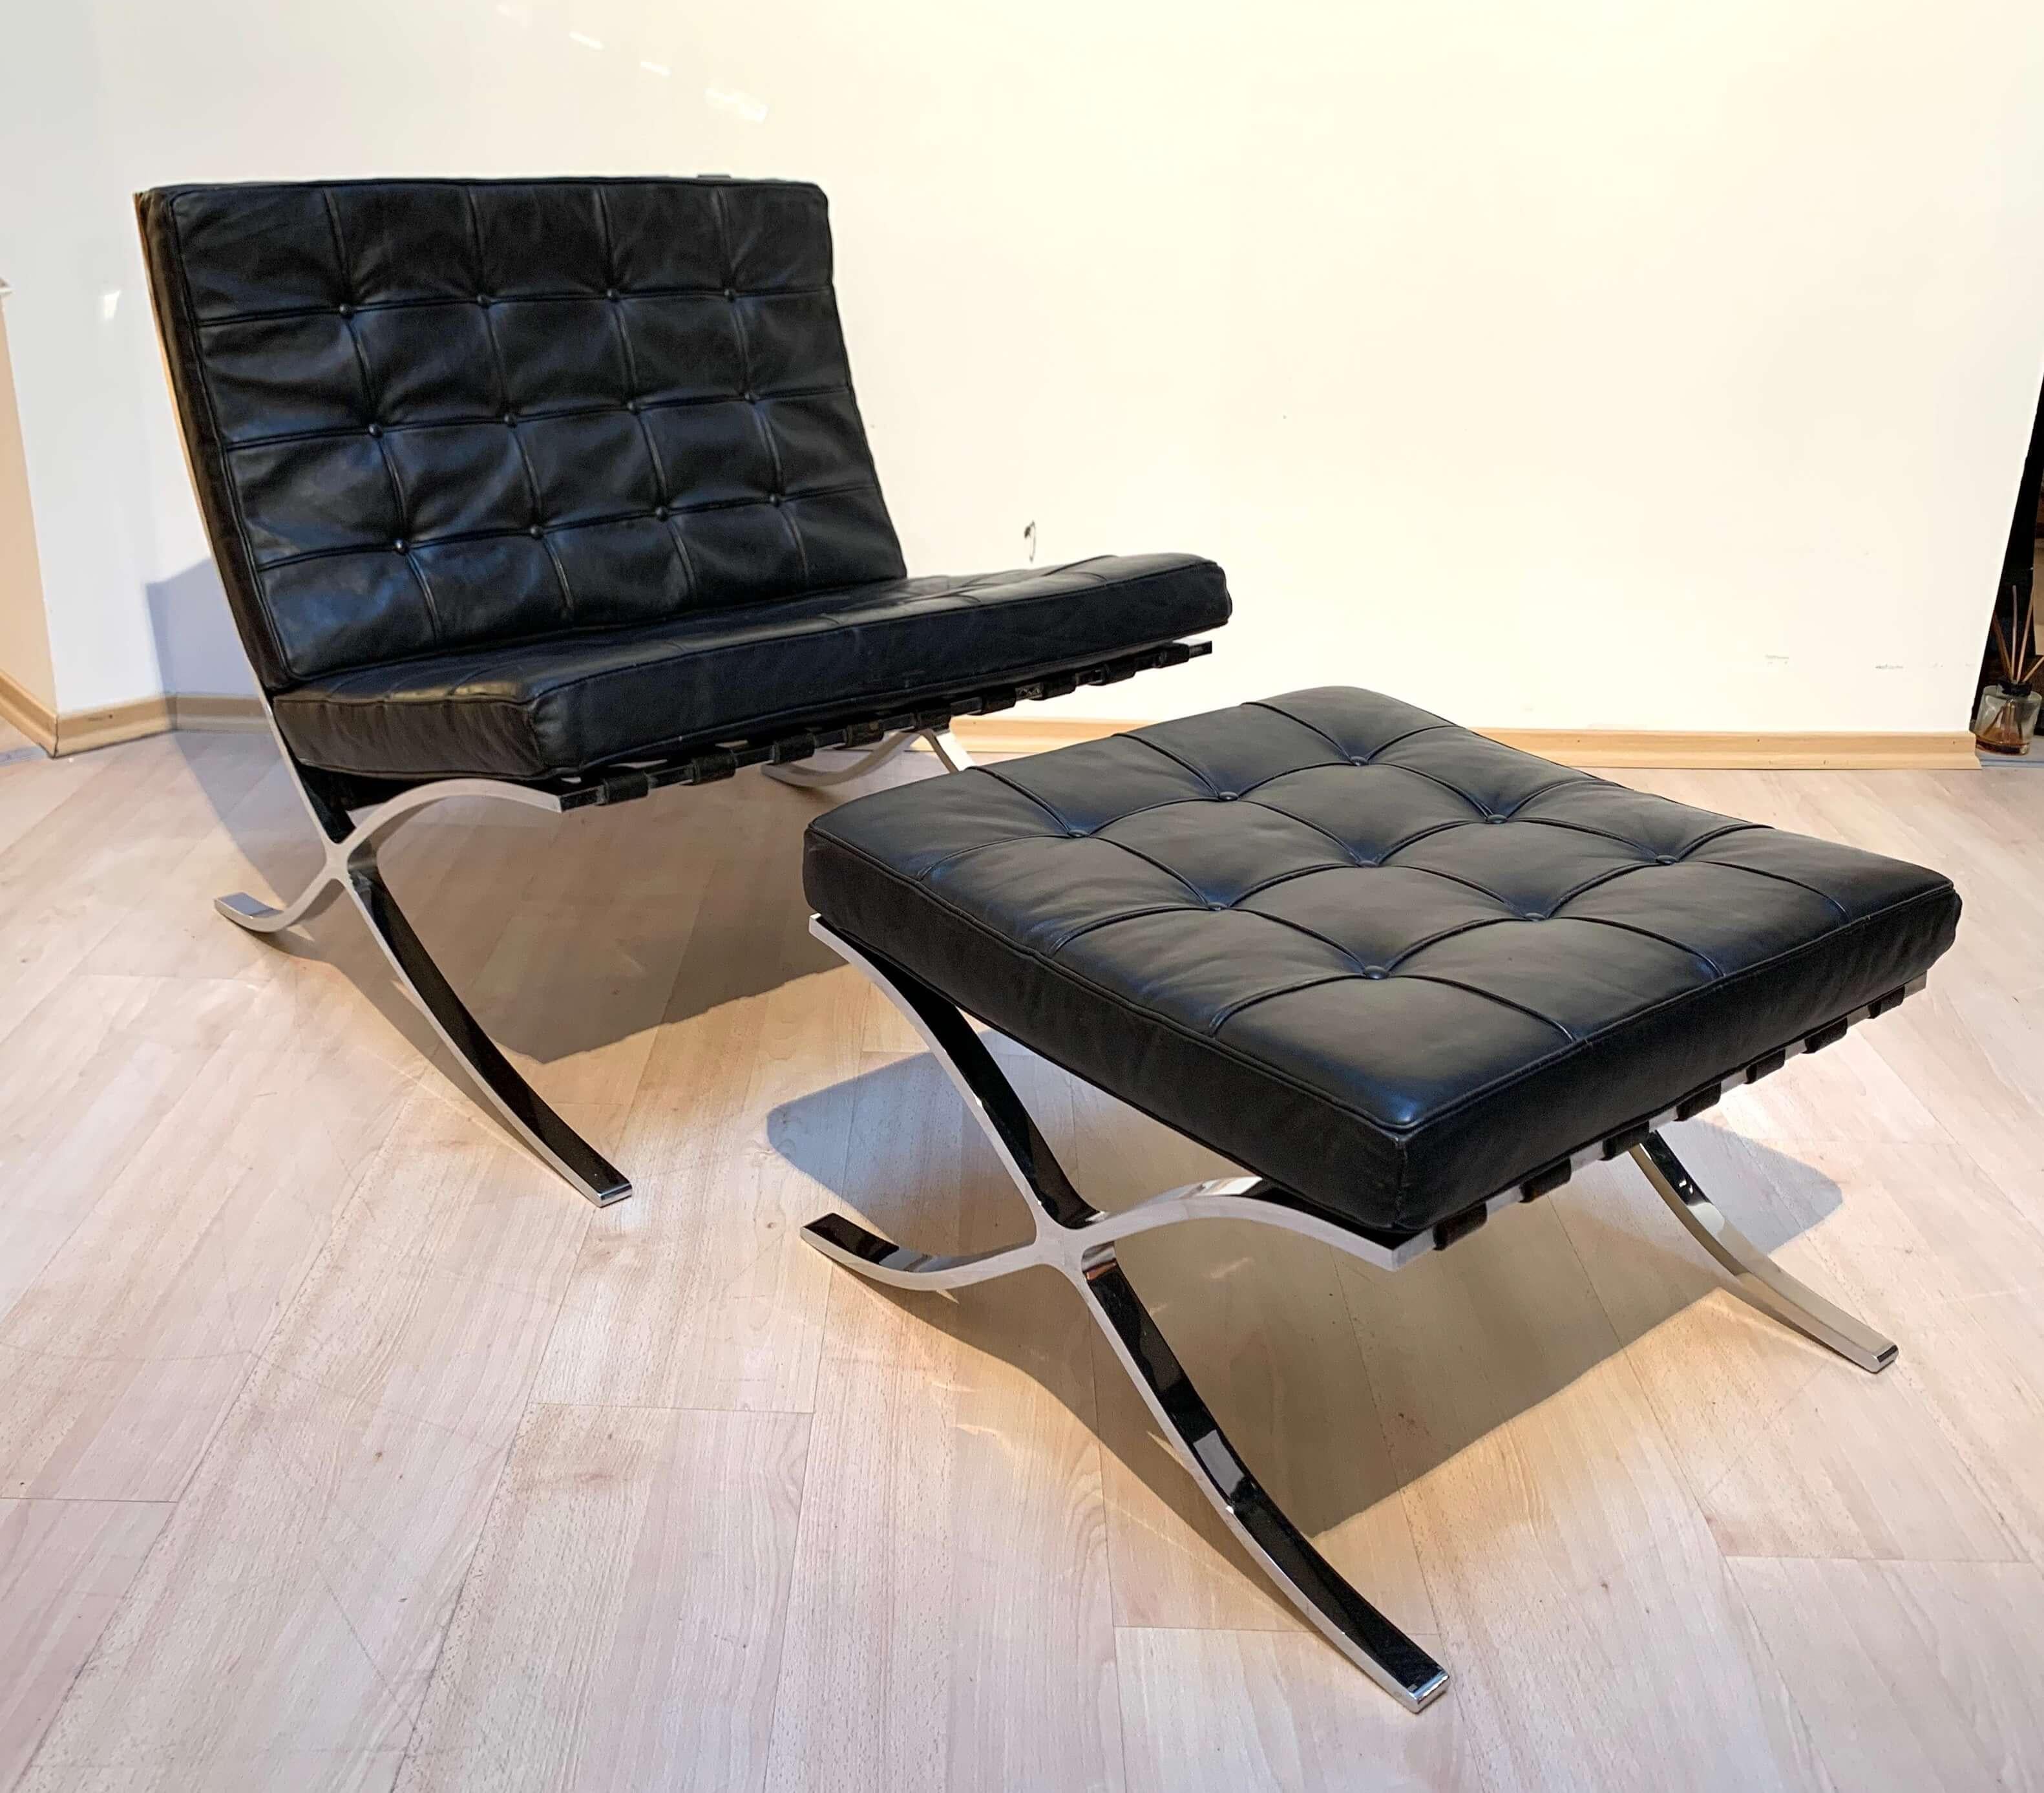 Polished Barcelona Chair with Ottoman, Black Leather, Knoll International, 1960s